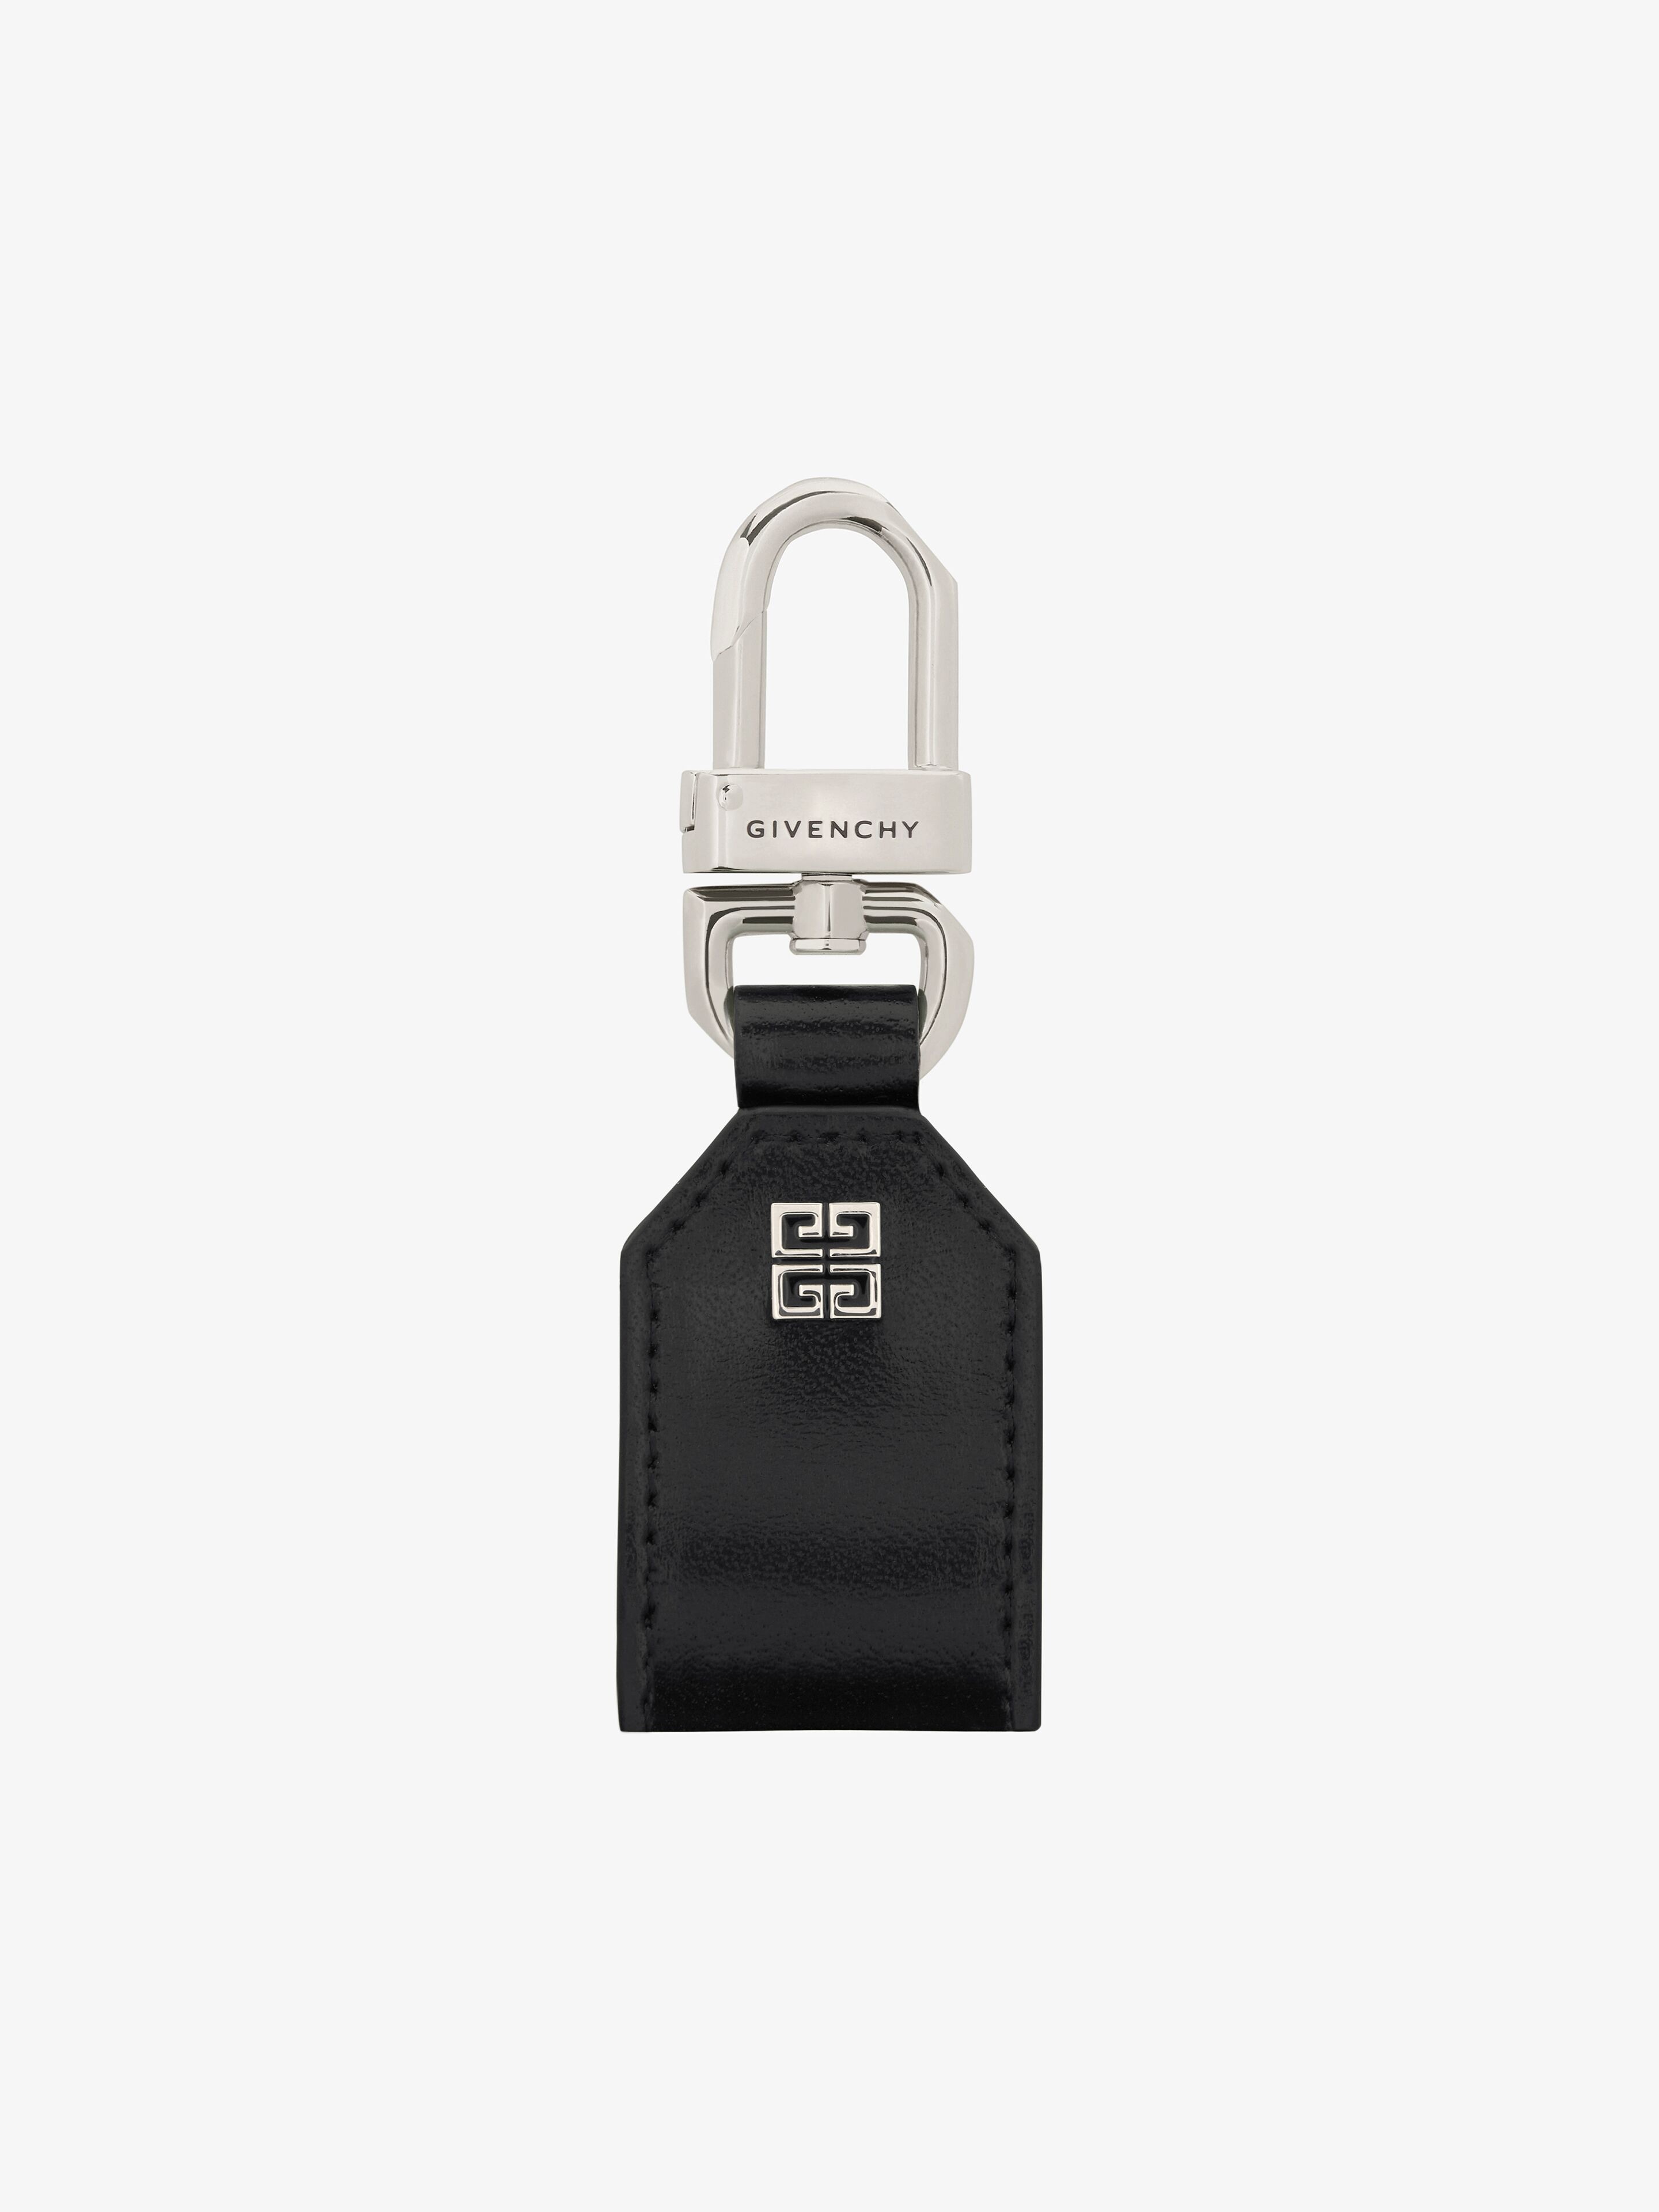 Genesis Black Leather Keychain - Free Shipping